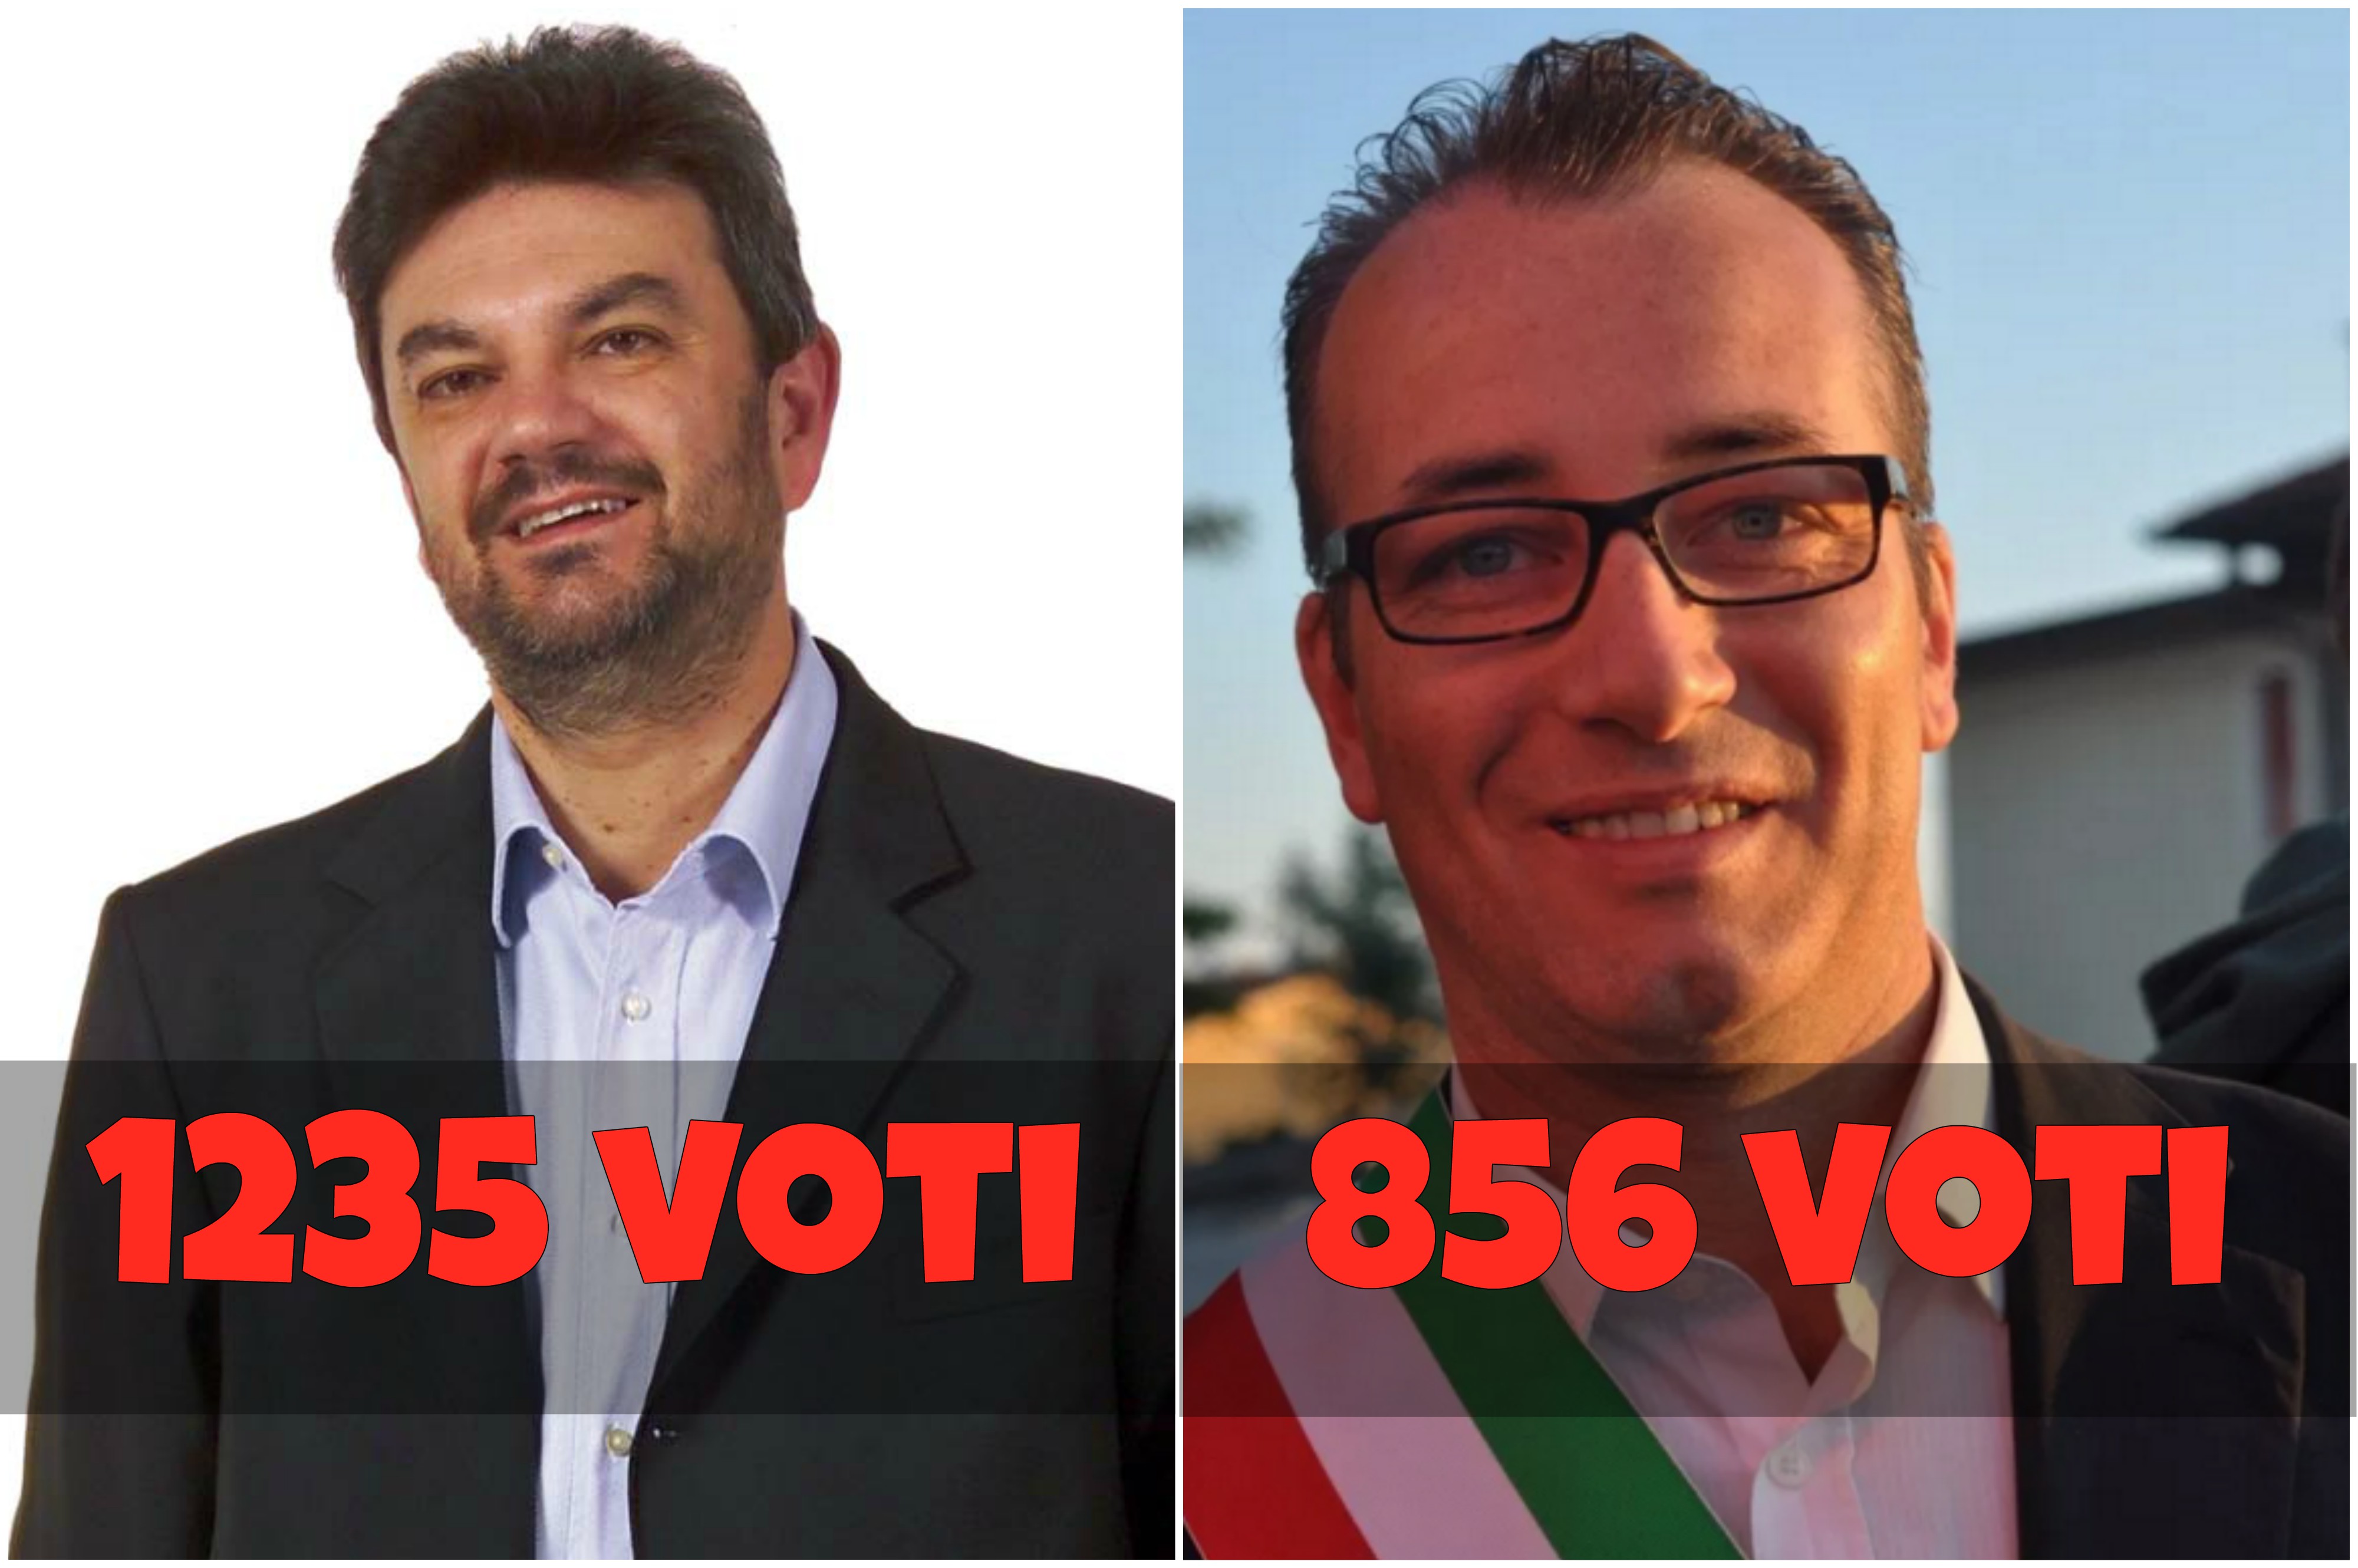 Miglior sindaco: vince Damiano Zoffoli